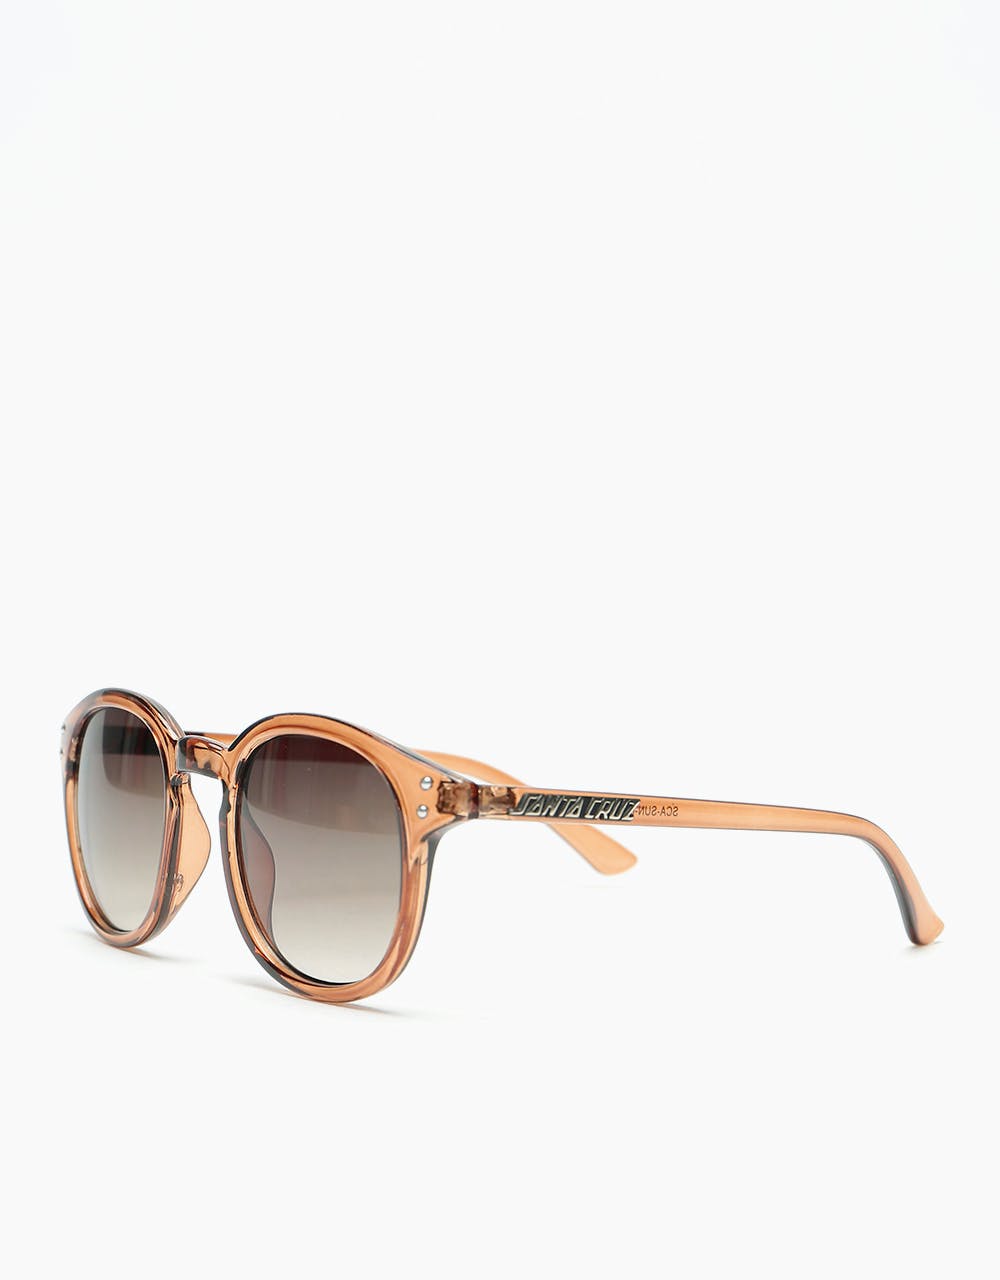 Santa Cruz Watson Sunglasses - Chocolate